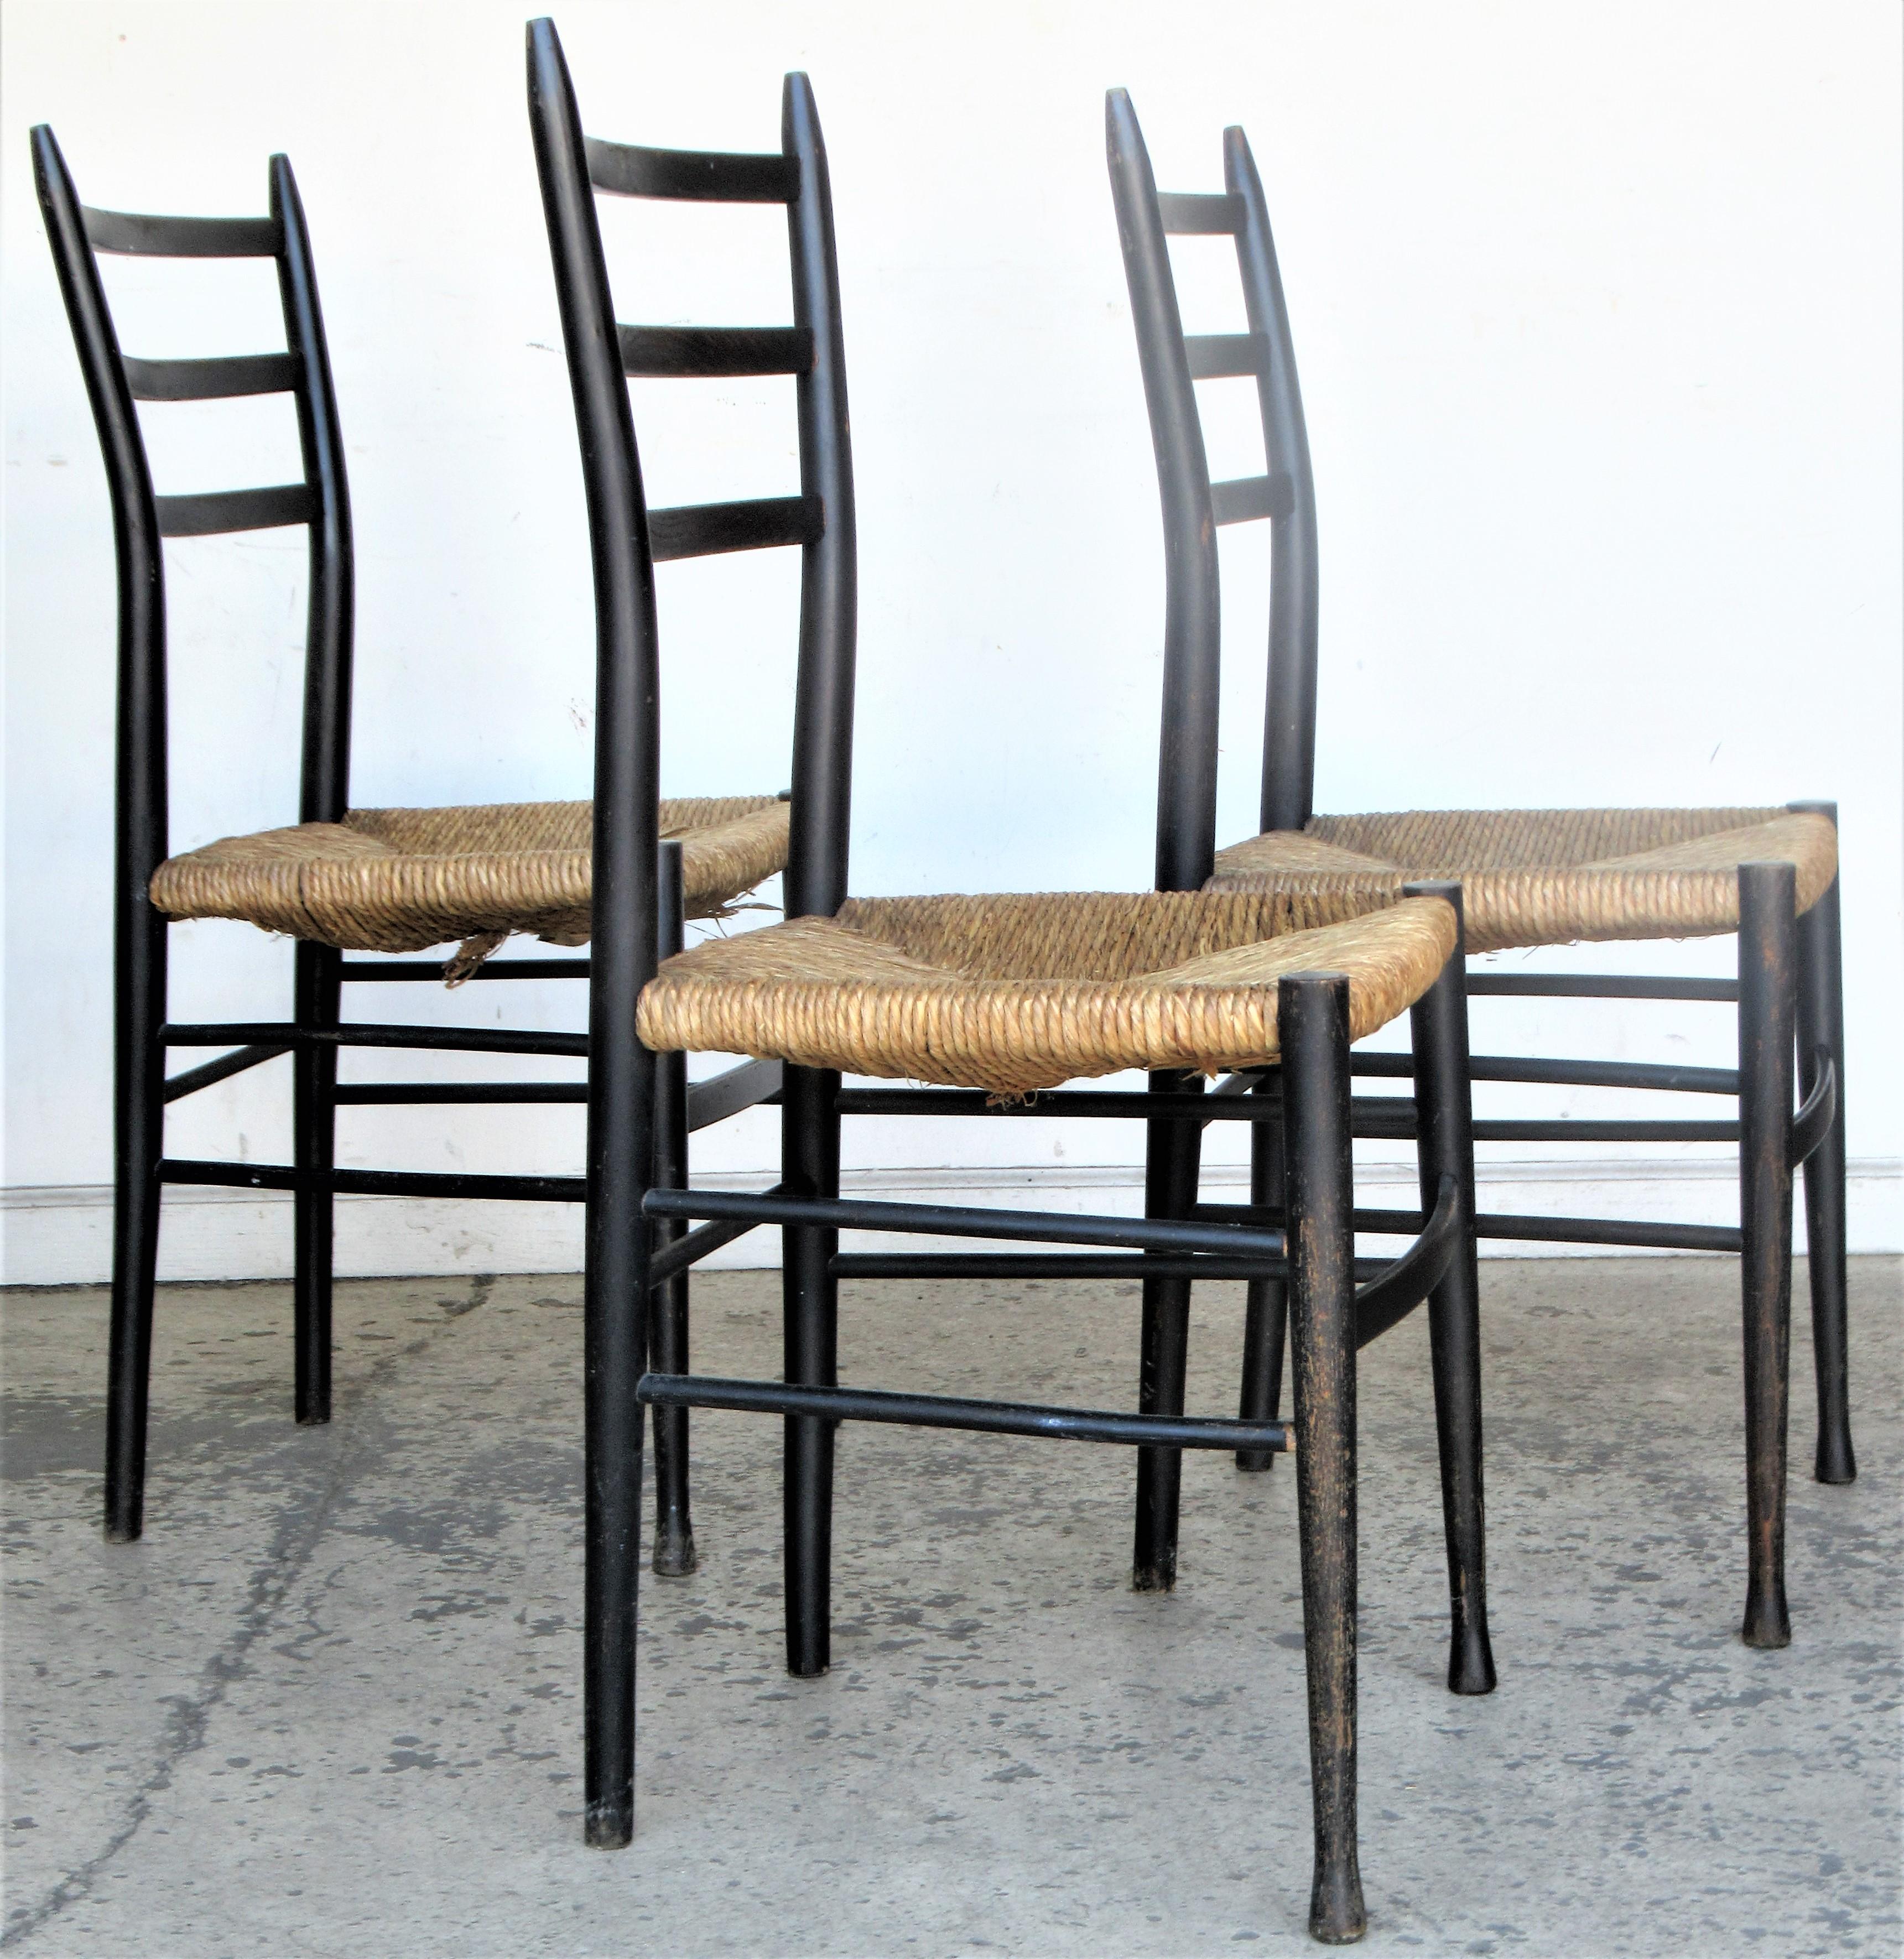 20th Century Gio Ponti Superleggera Style Chairs, Made in Italy